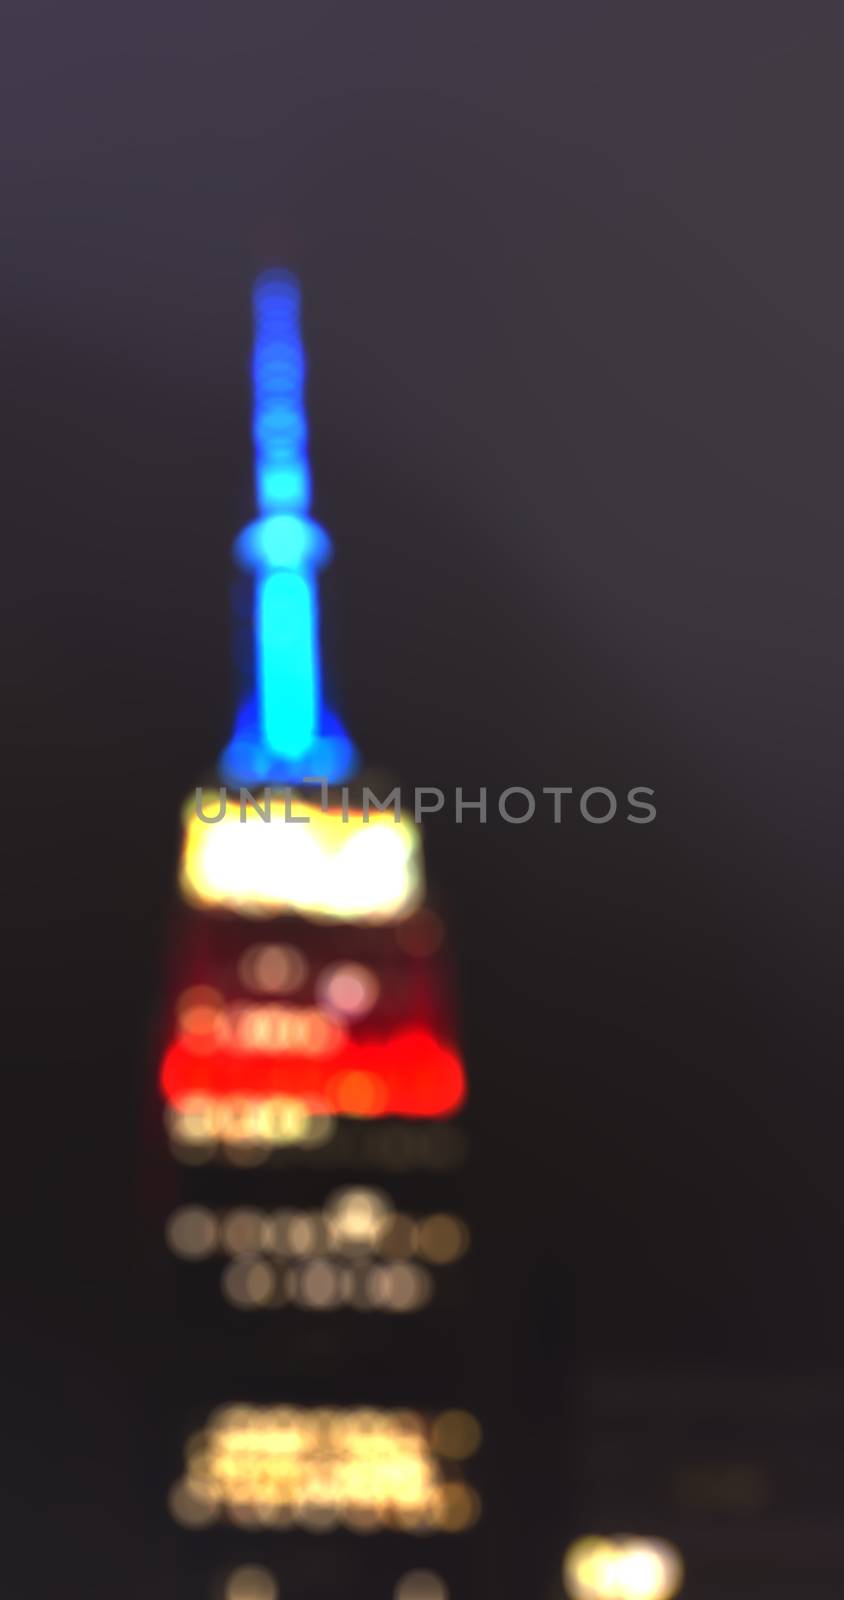 Beauty city lights blurred bokeh background